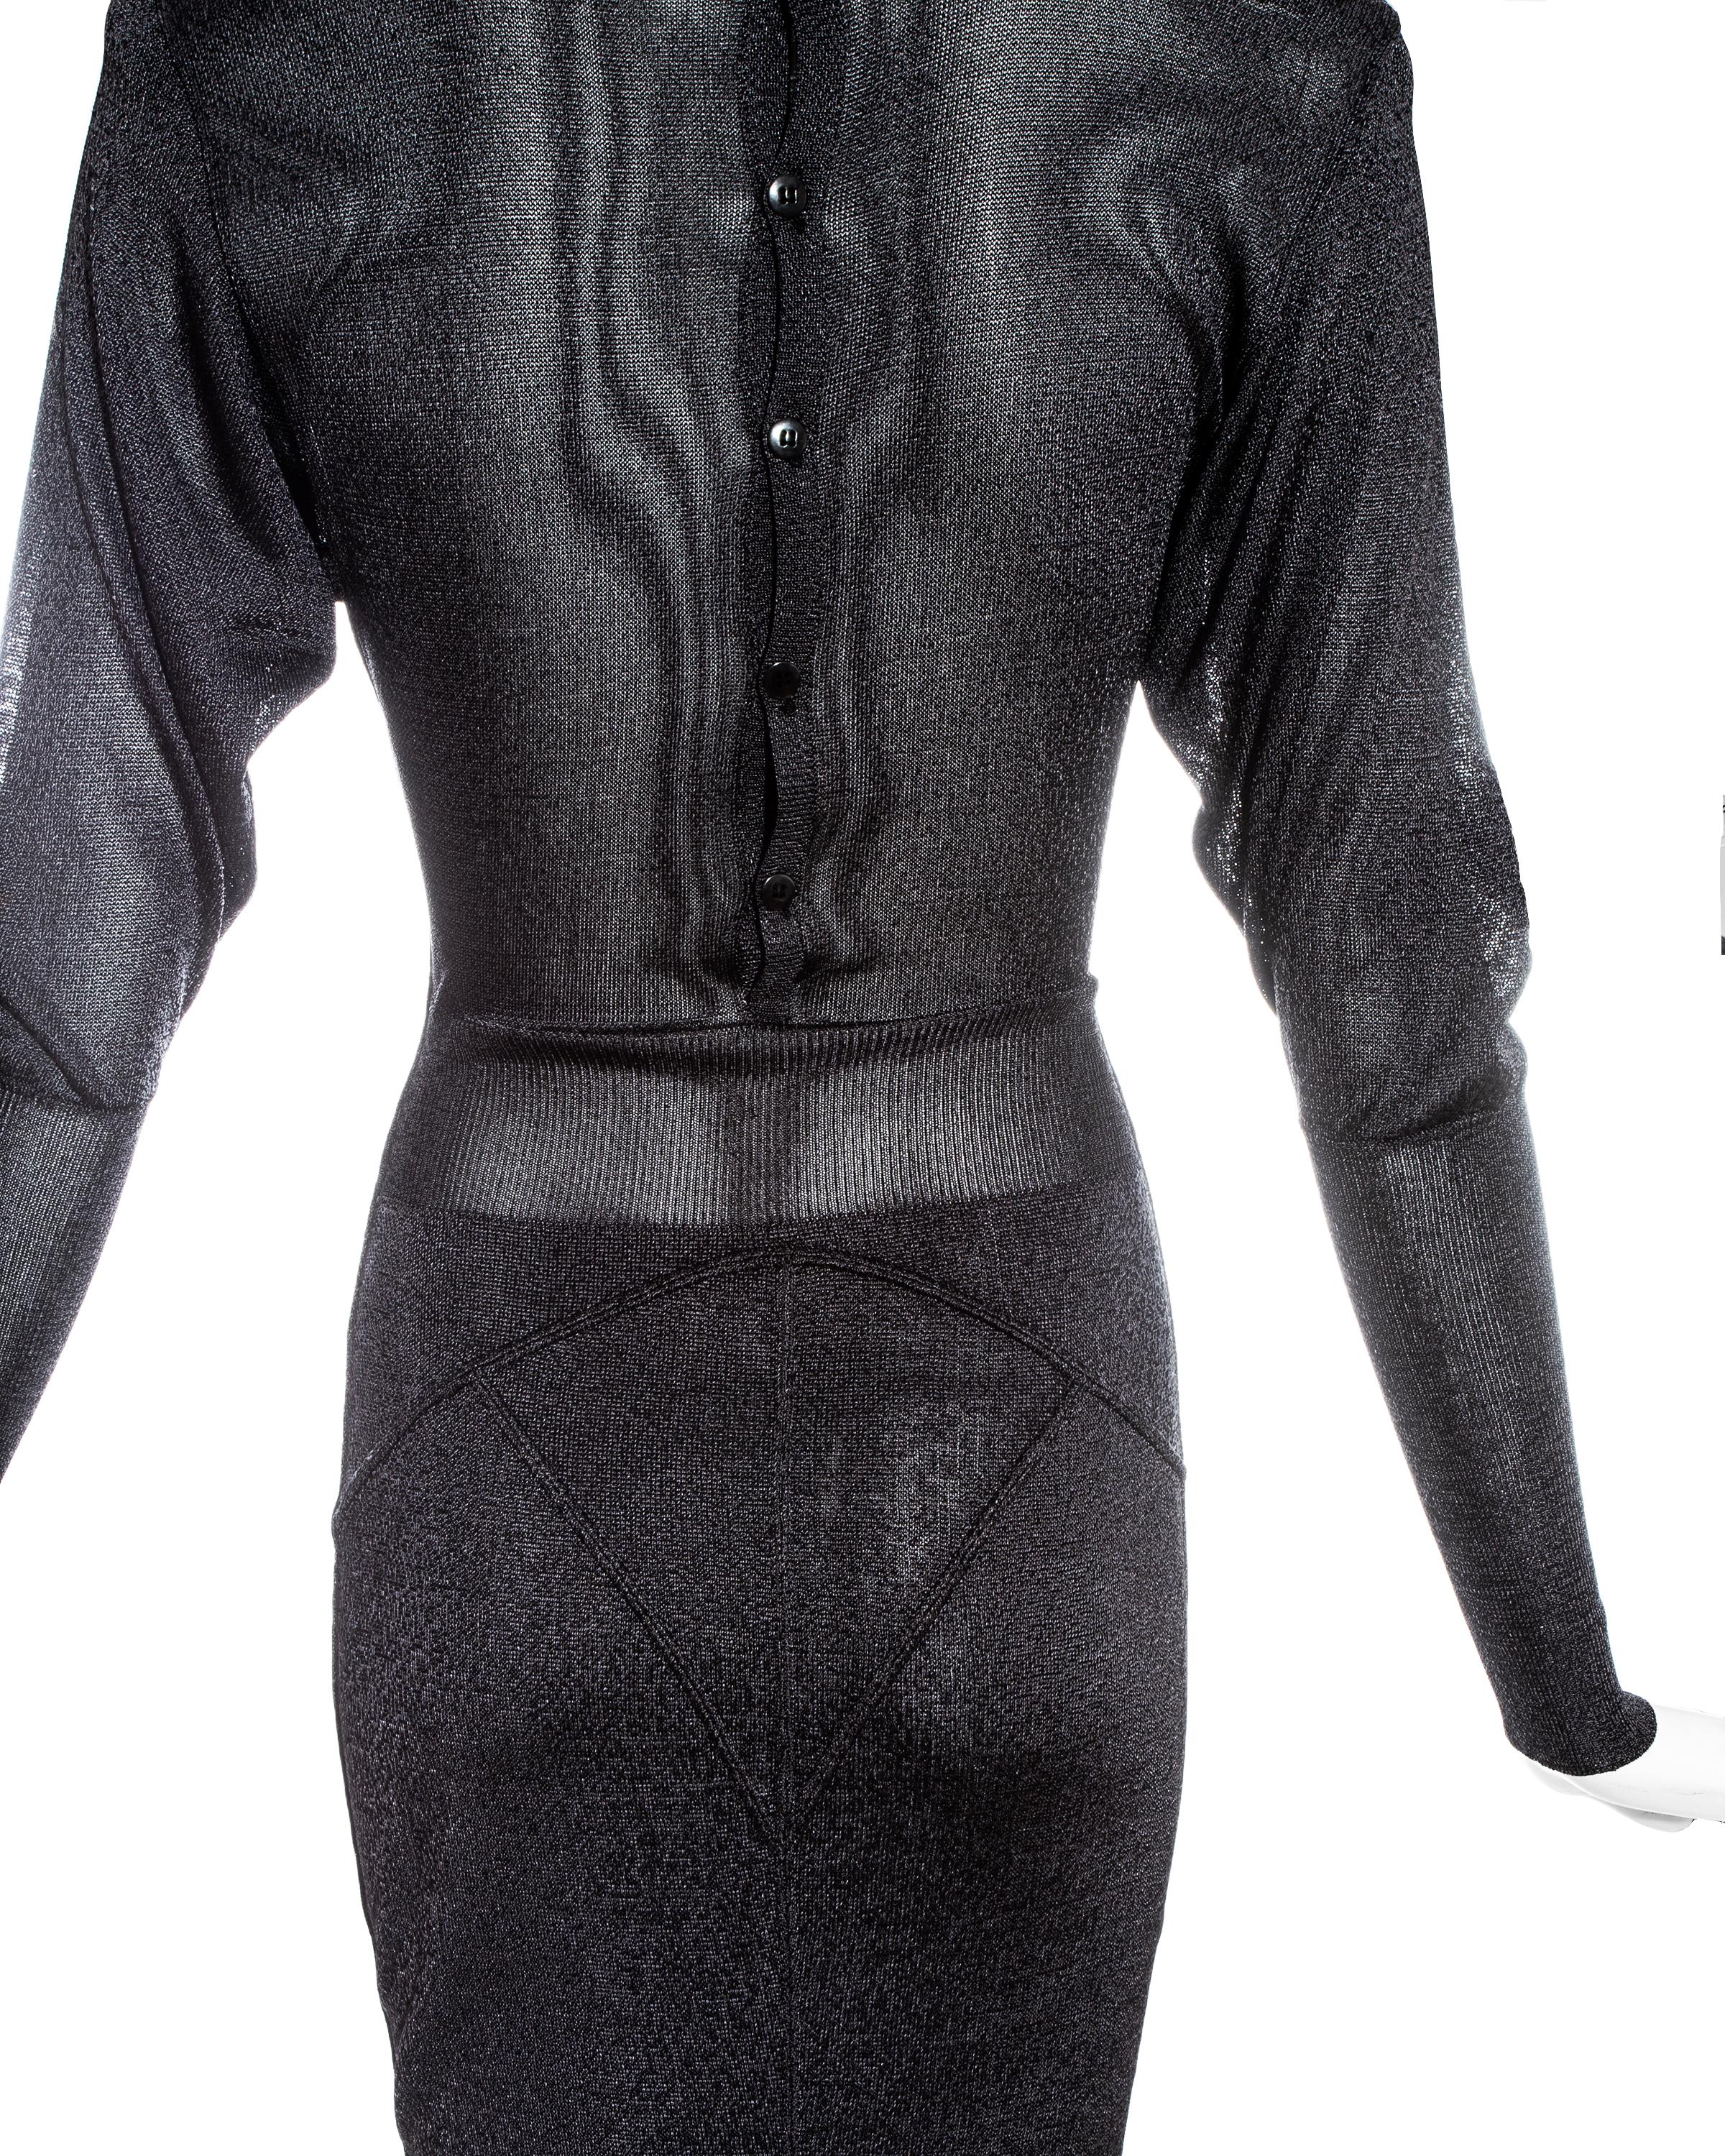 Black Azzedine Alaia grey acetate knit evening dress fw 1986 For Sale